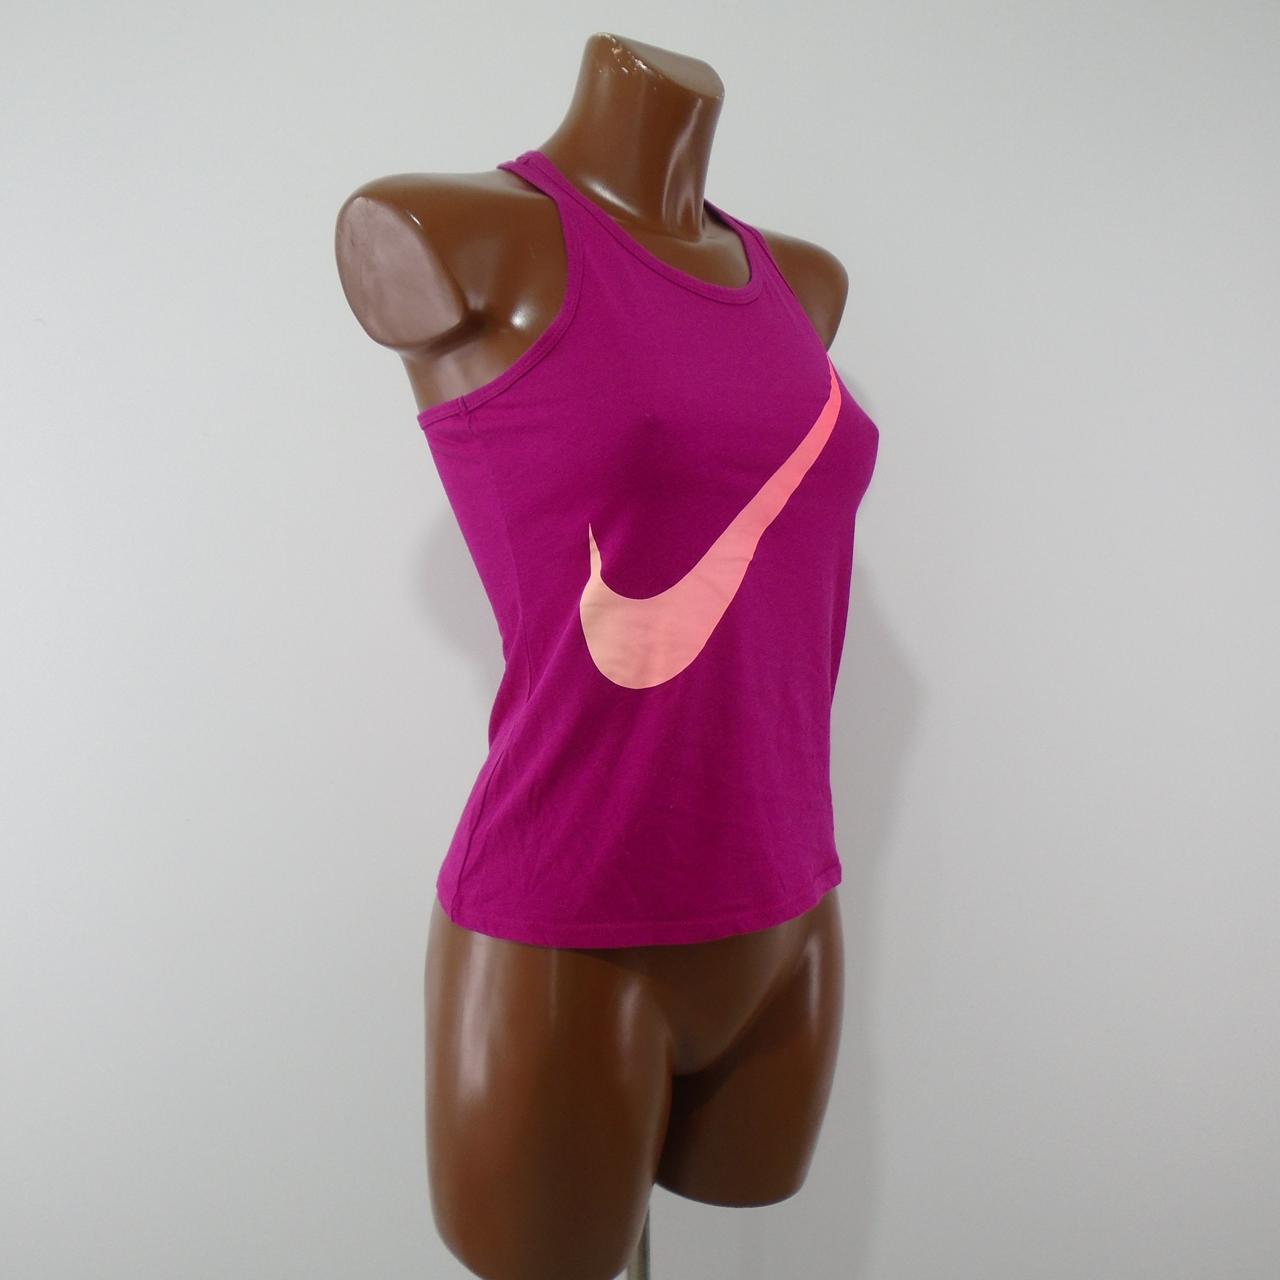 Women's T-Shirt Nike. Pink. L. Used. Good